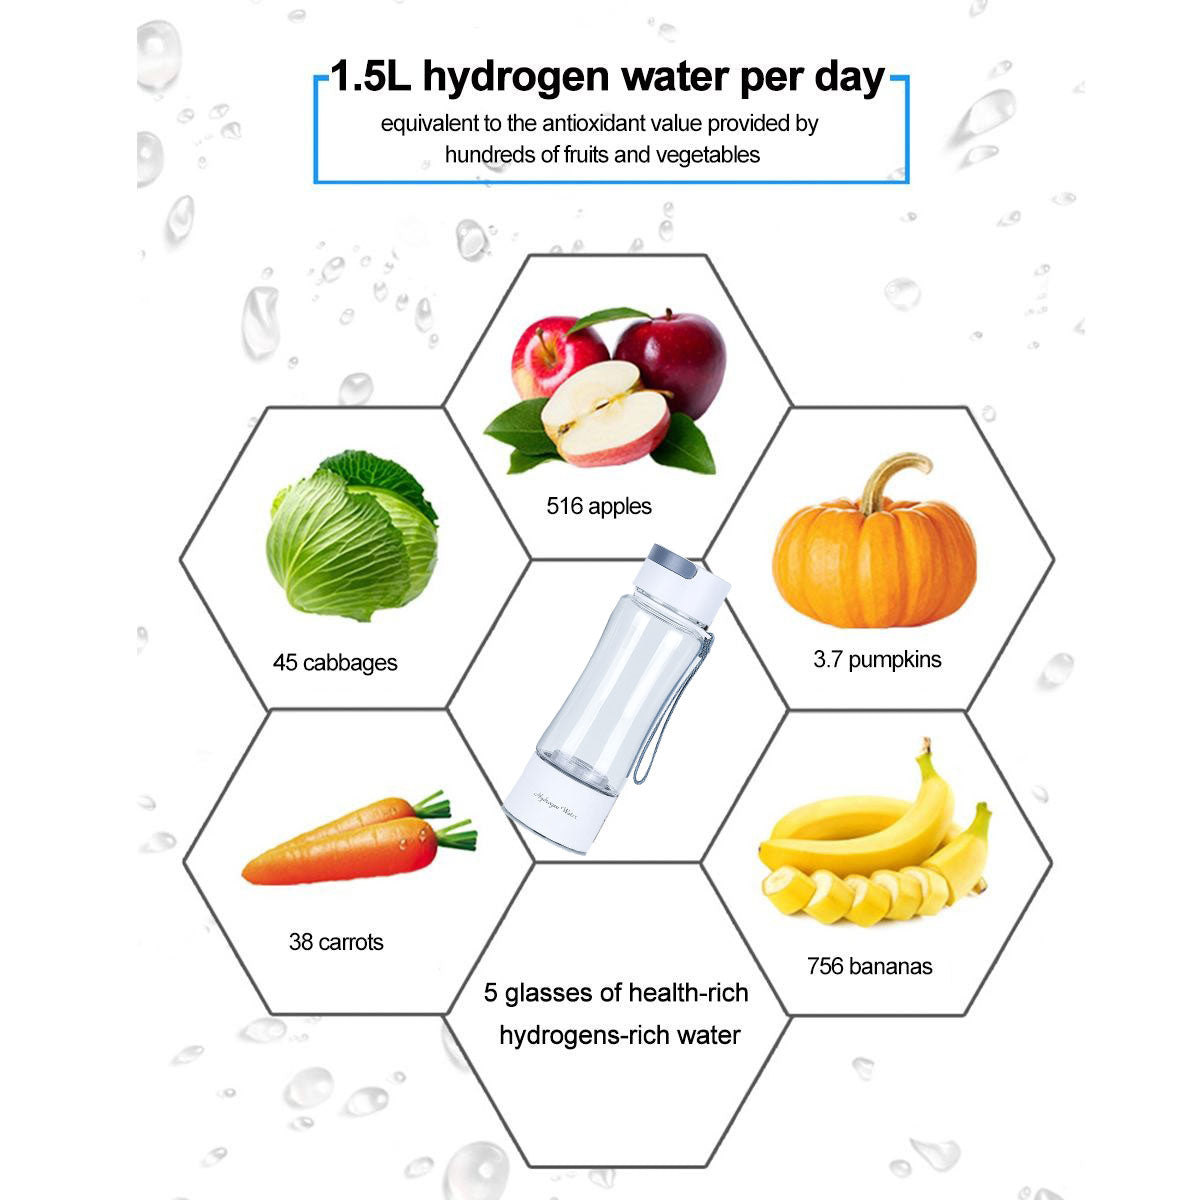 HydroRich3000™ High level Hydrogen Water Generator & Water Purifier Bottle